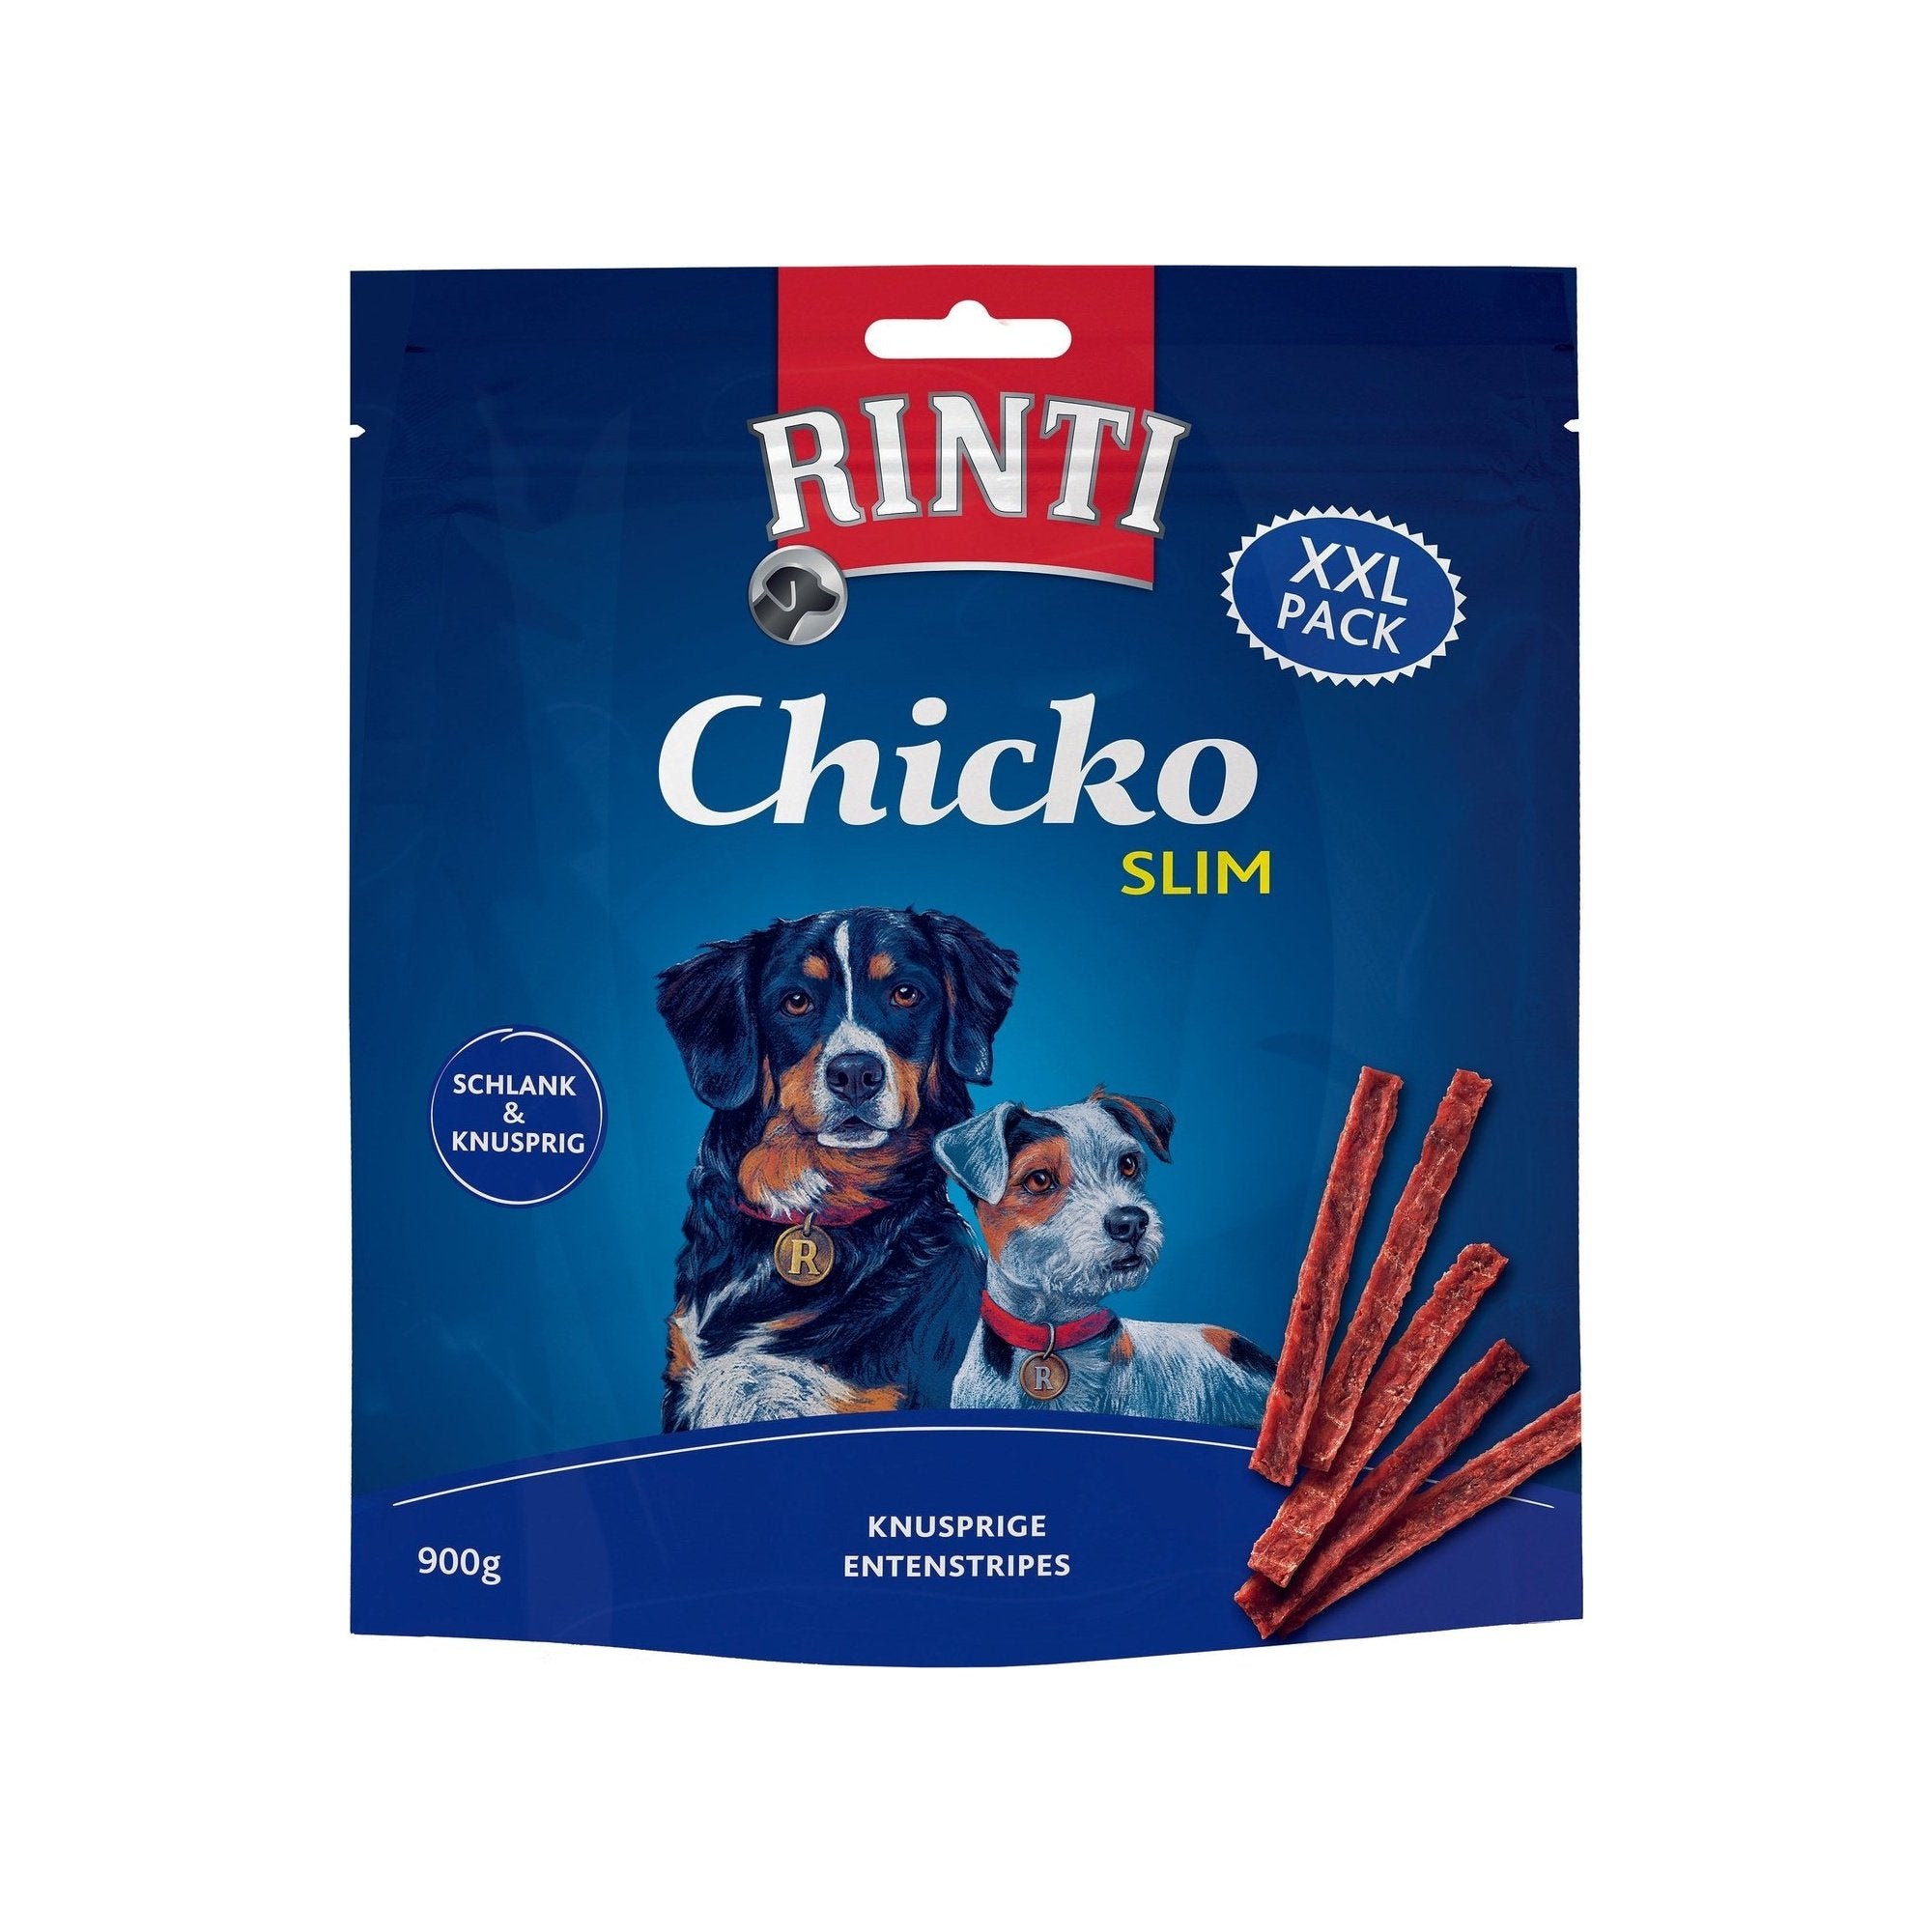 Rinti Chicko Slim Ente Knusprige Entenstripes - zoo.de